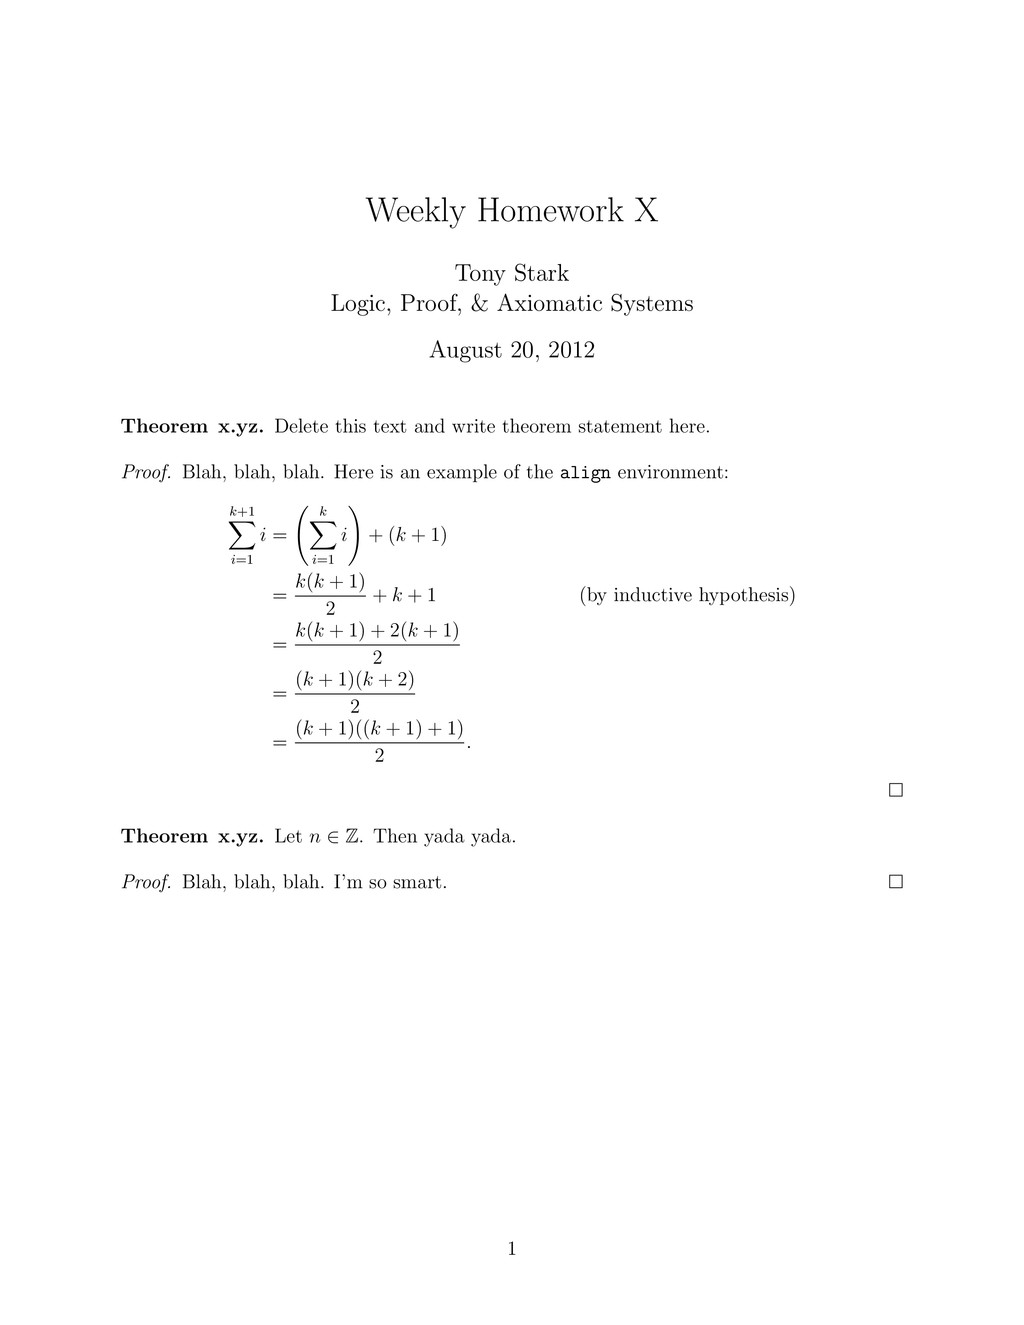 PDF output for LaTeX homework template Speaker Deck